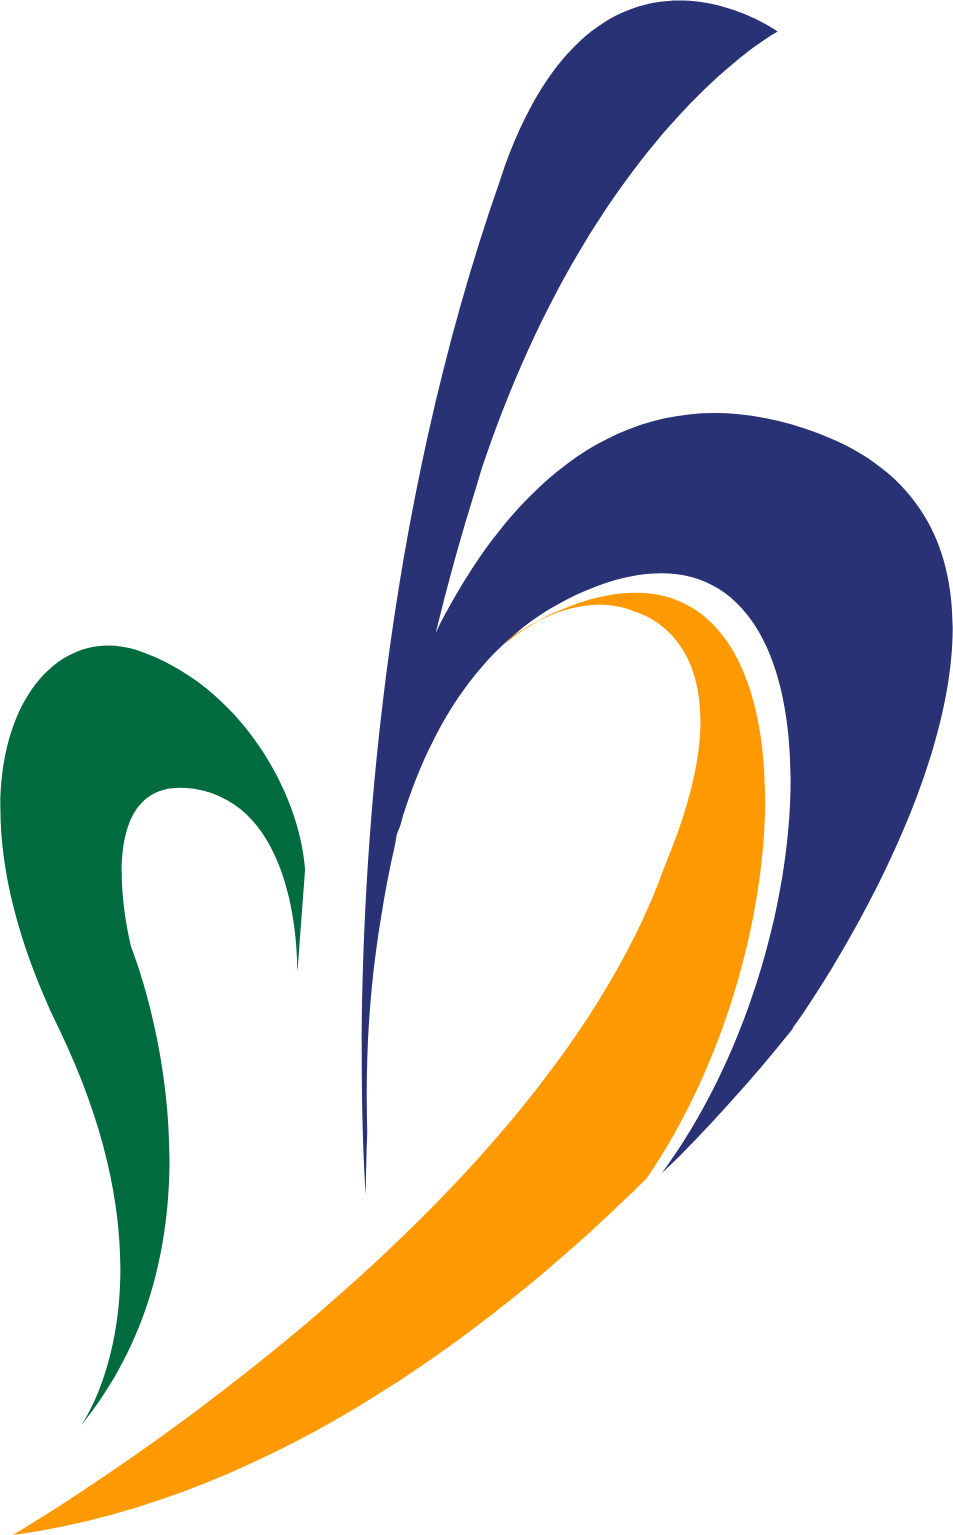 Arabian International Healthcare Holding logo (PNG transparent)